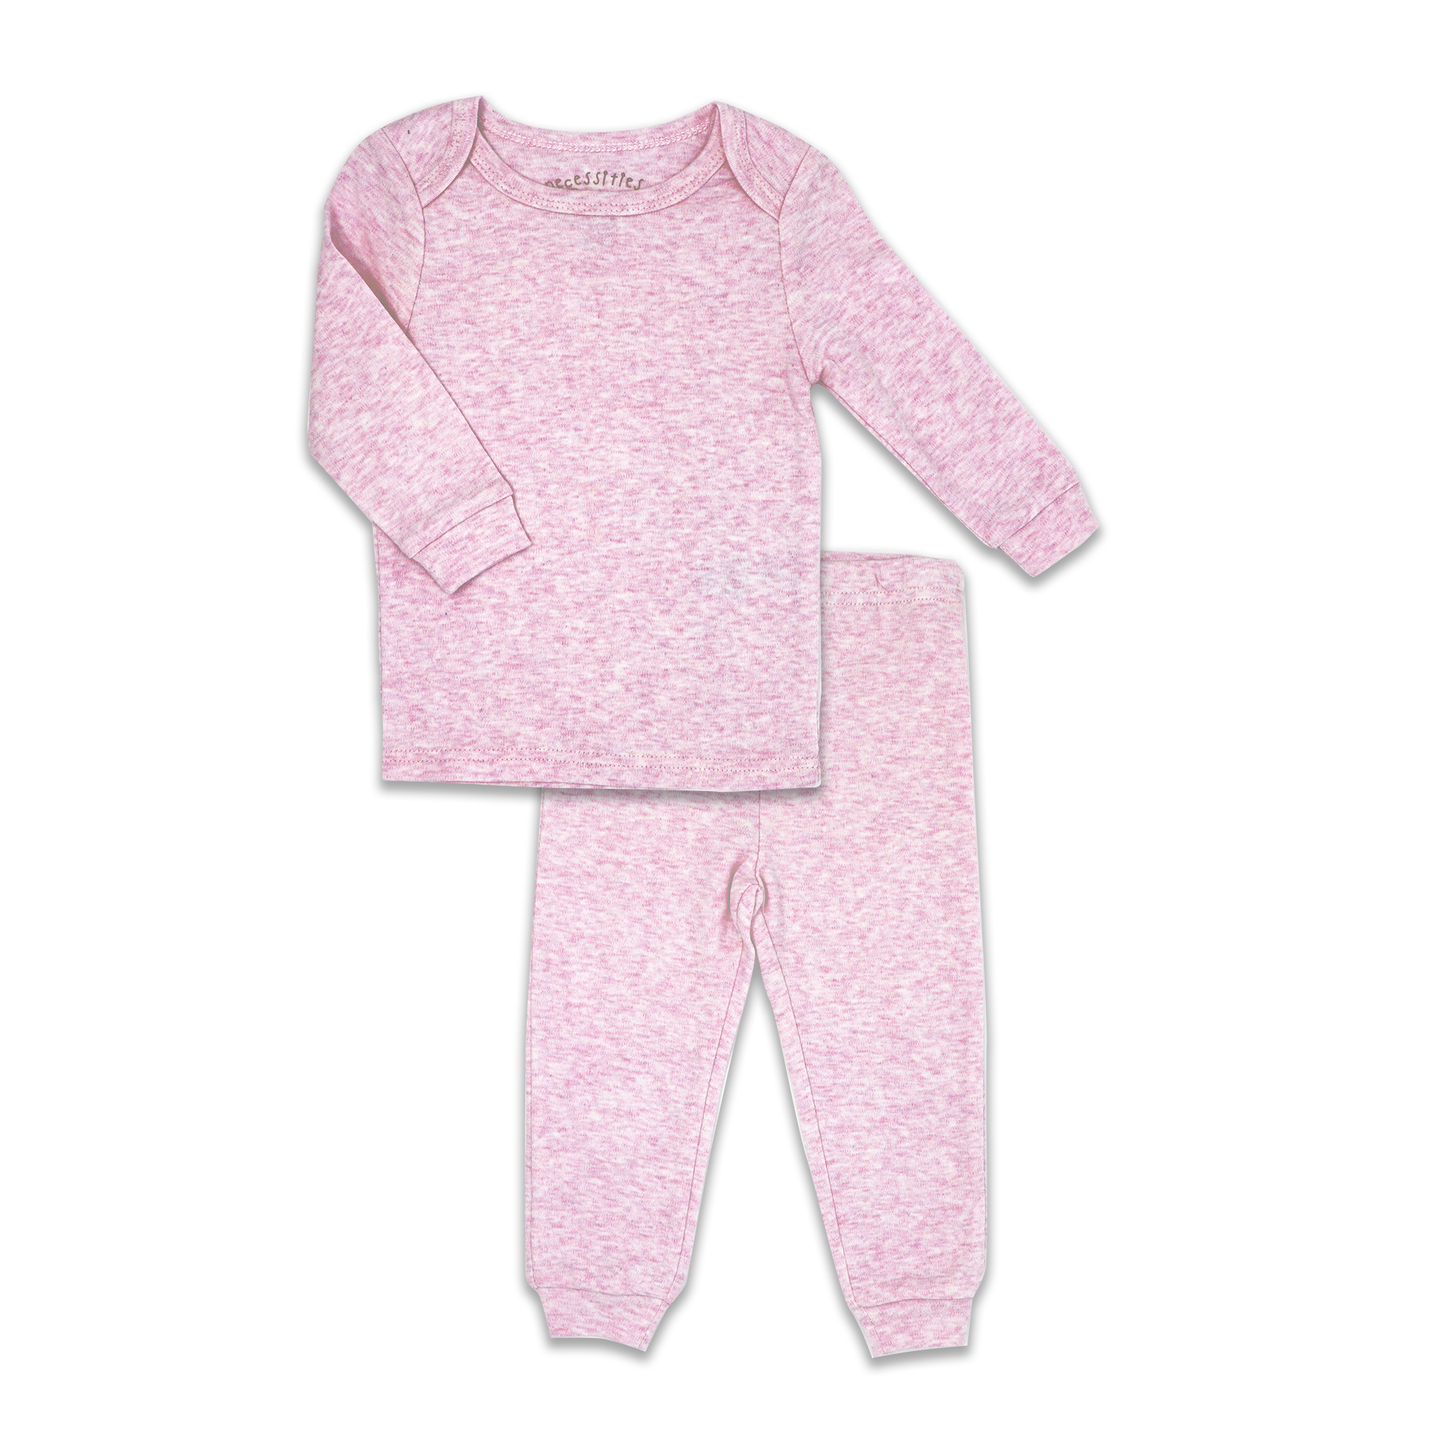 Tiny Toddler 2 Piece Pajama Set